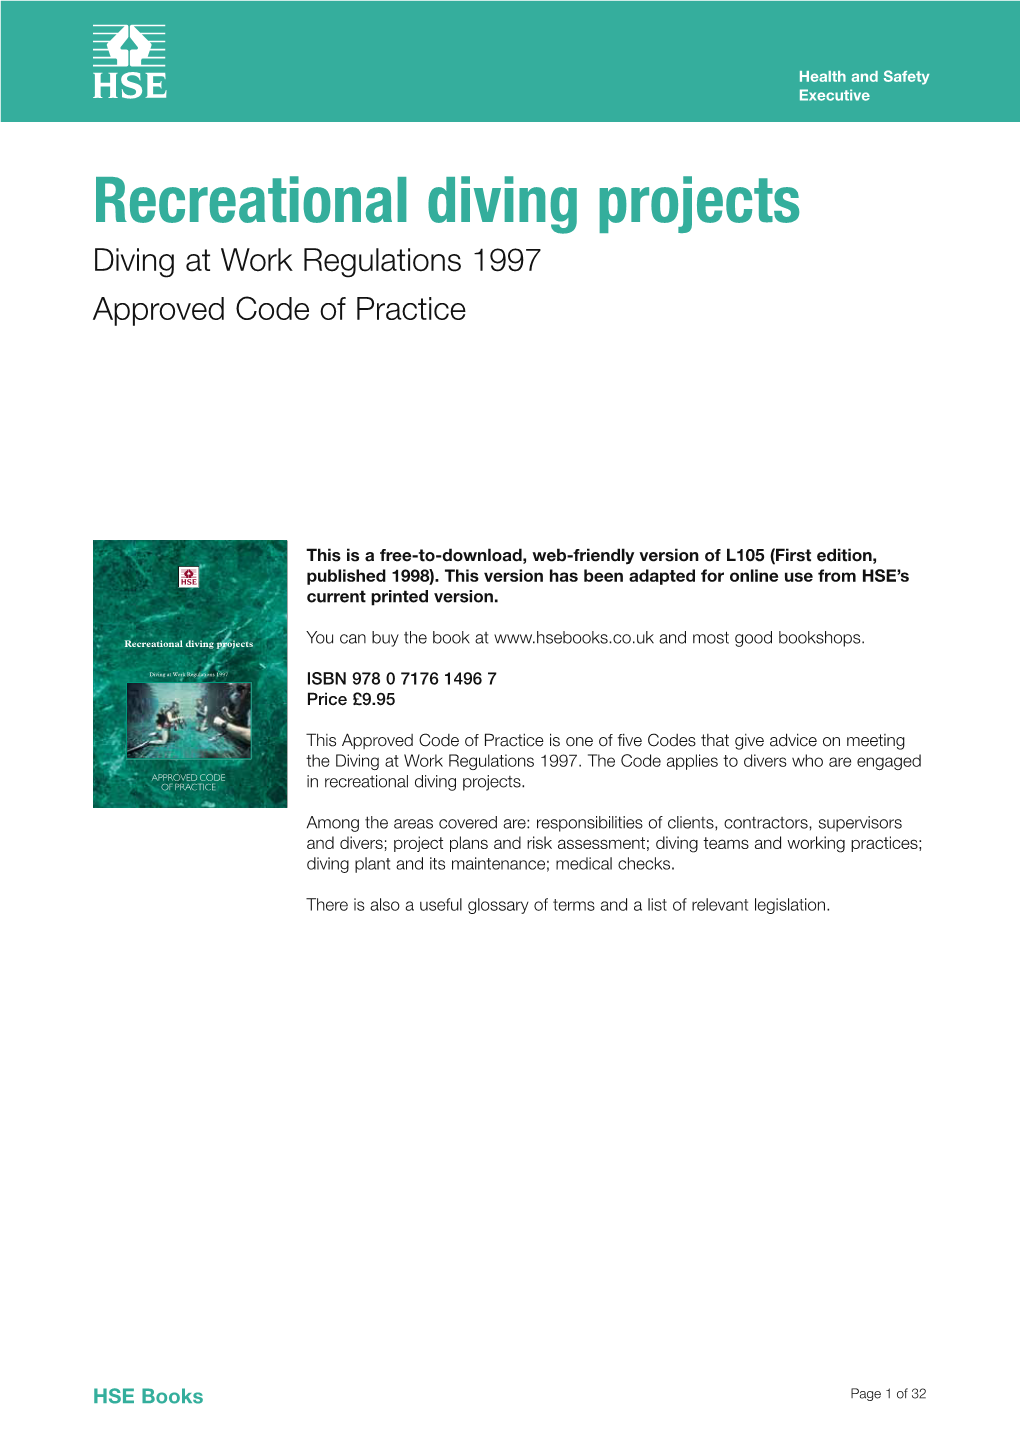 HSE Diving at Work Regulations 1997